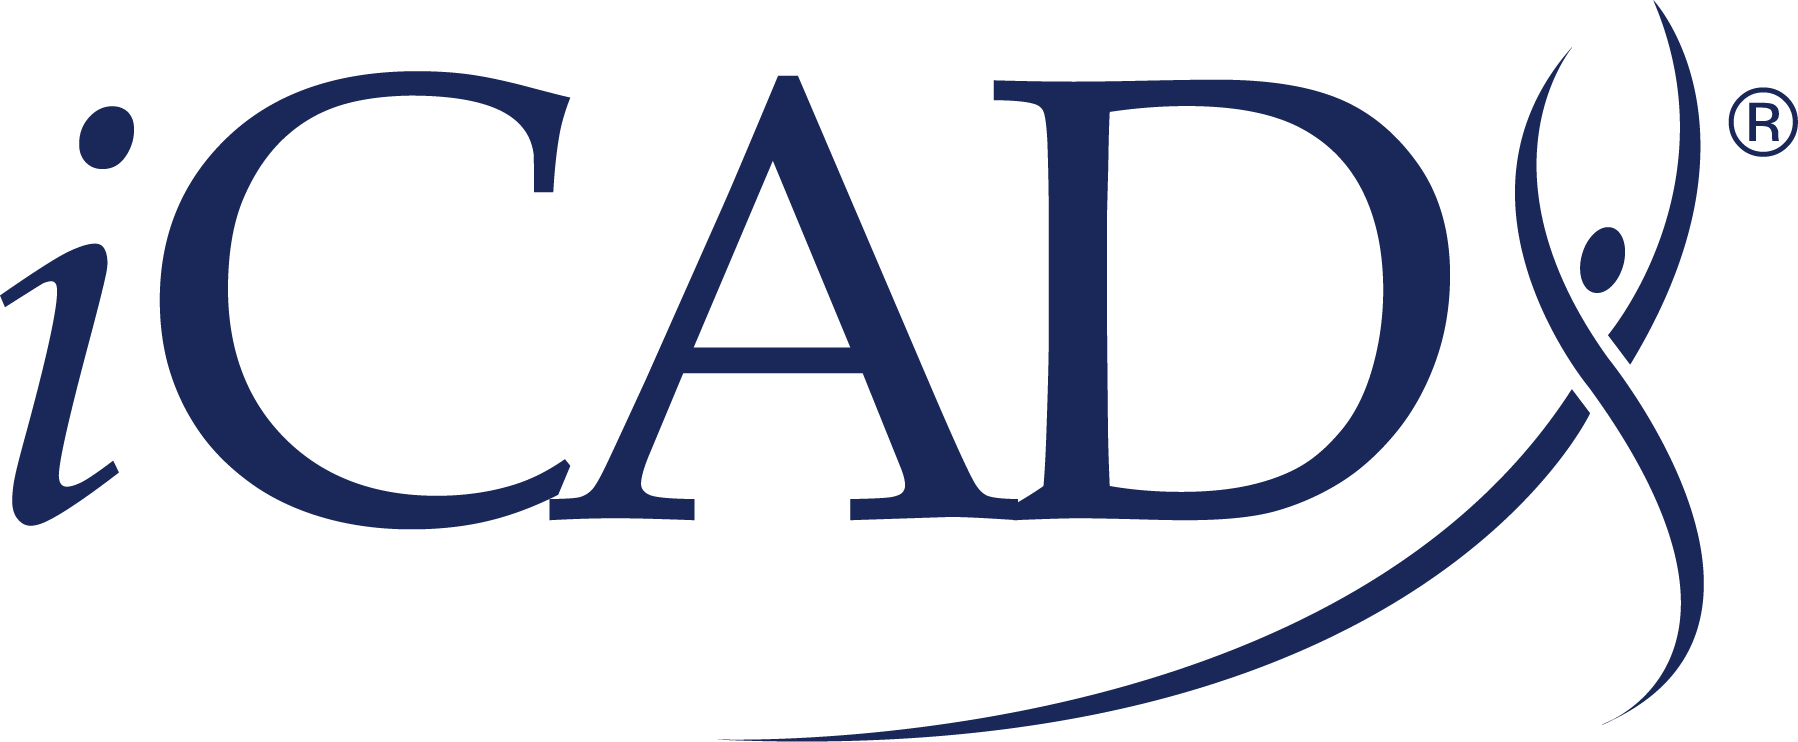 iCAD_logo - PMS281.png